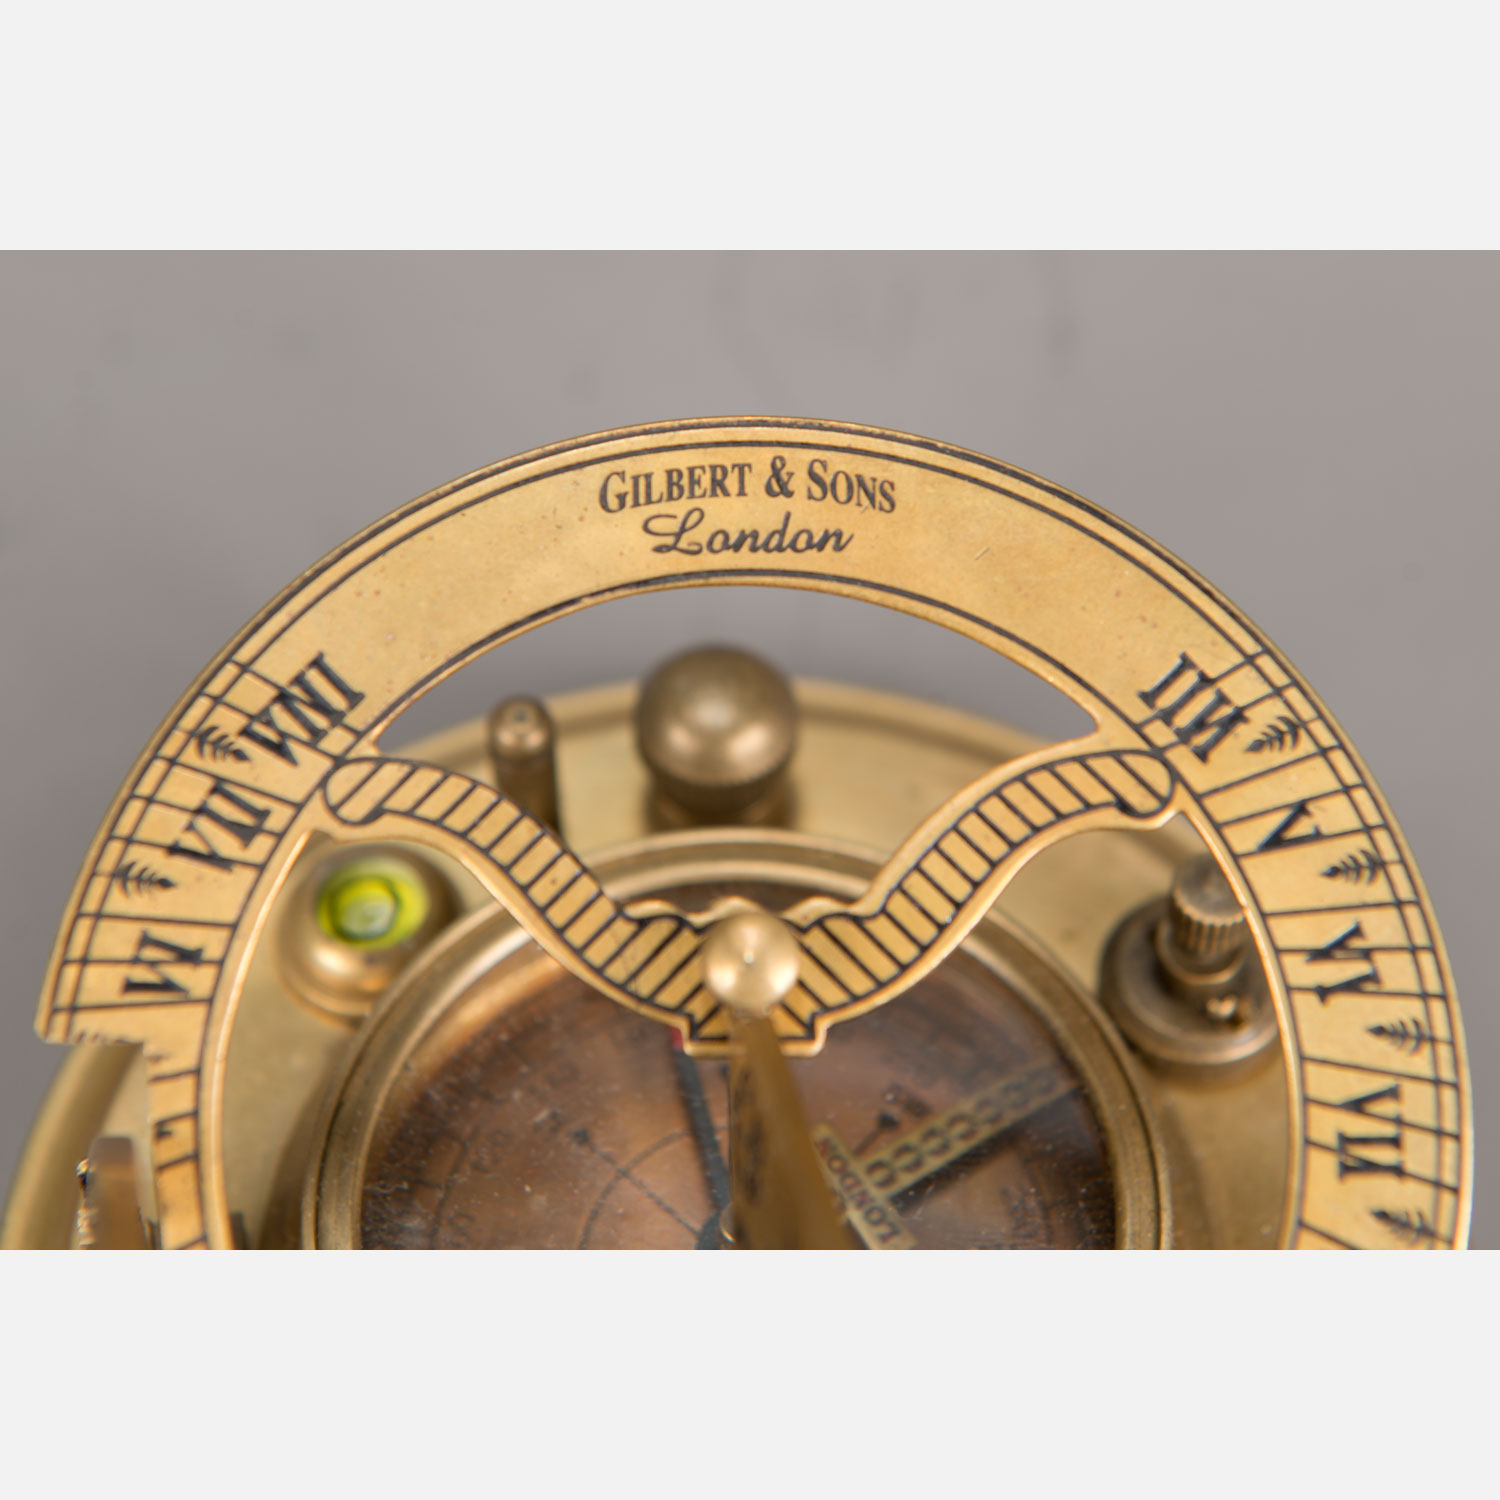 Gilbert & Sons London compass - Image 3 of 3